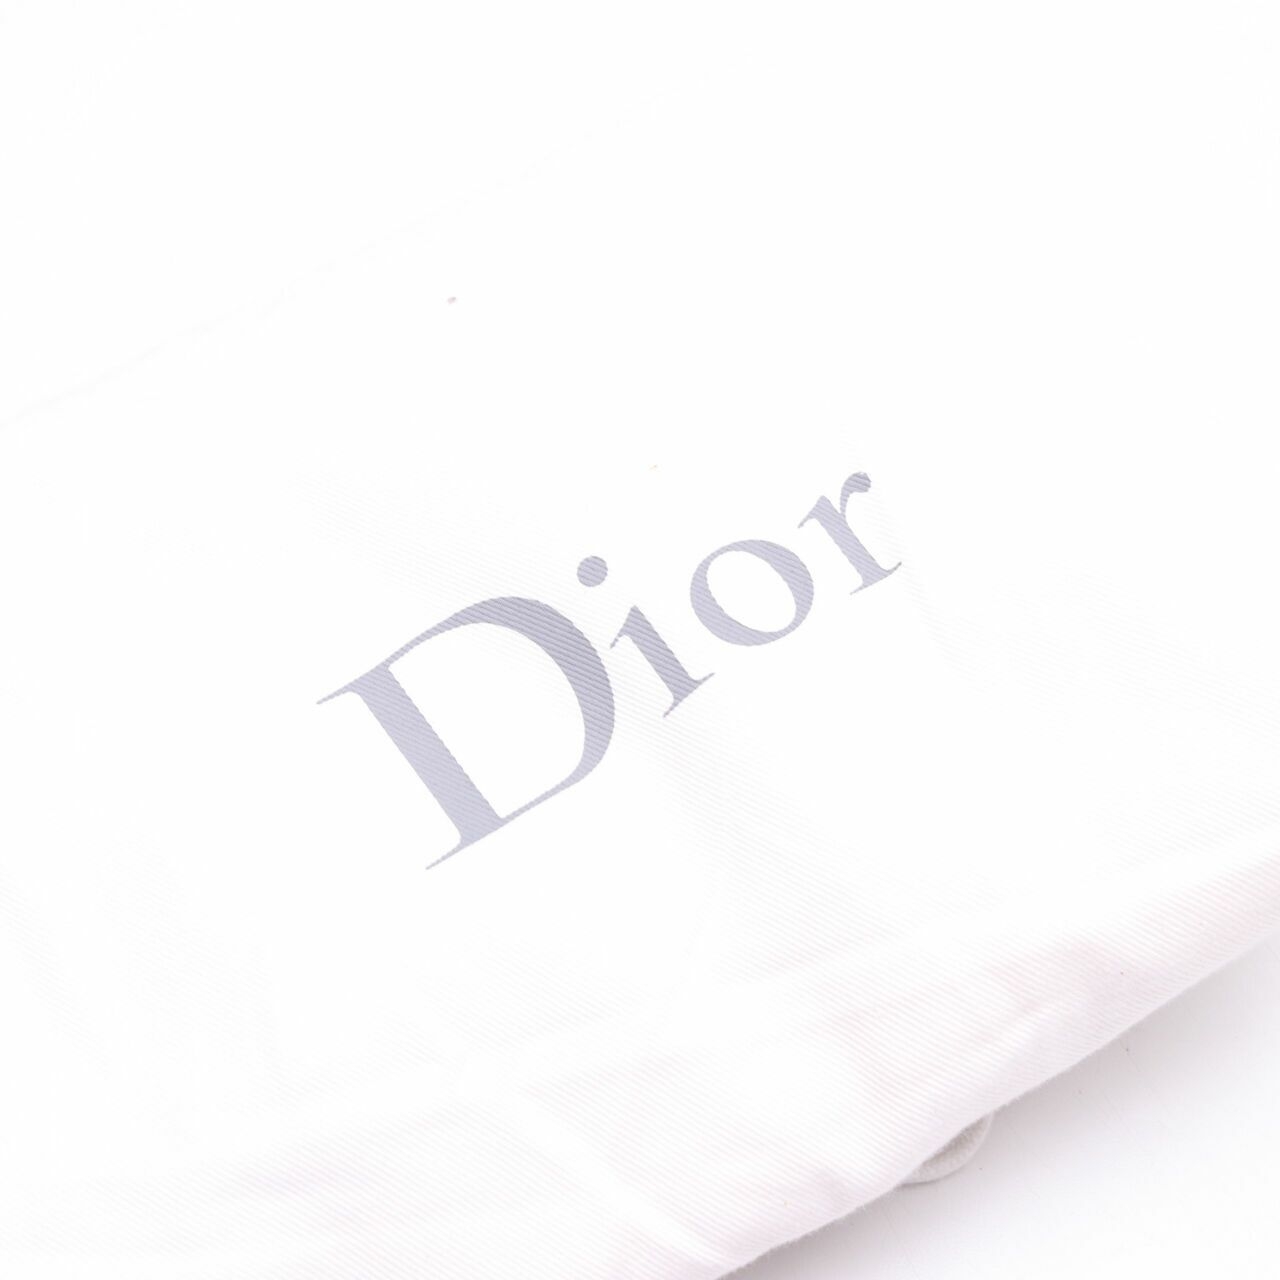 Christian Christian Dior Book Green Check Tote Bag